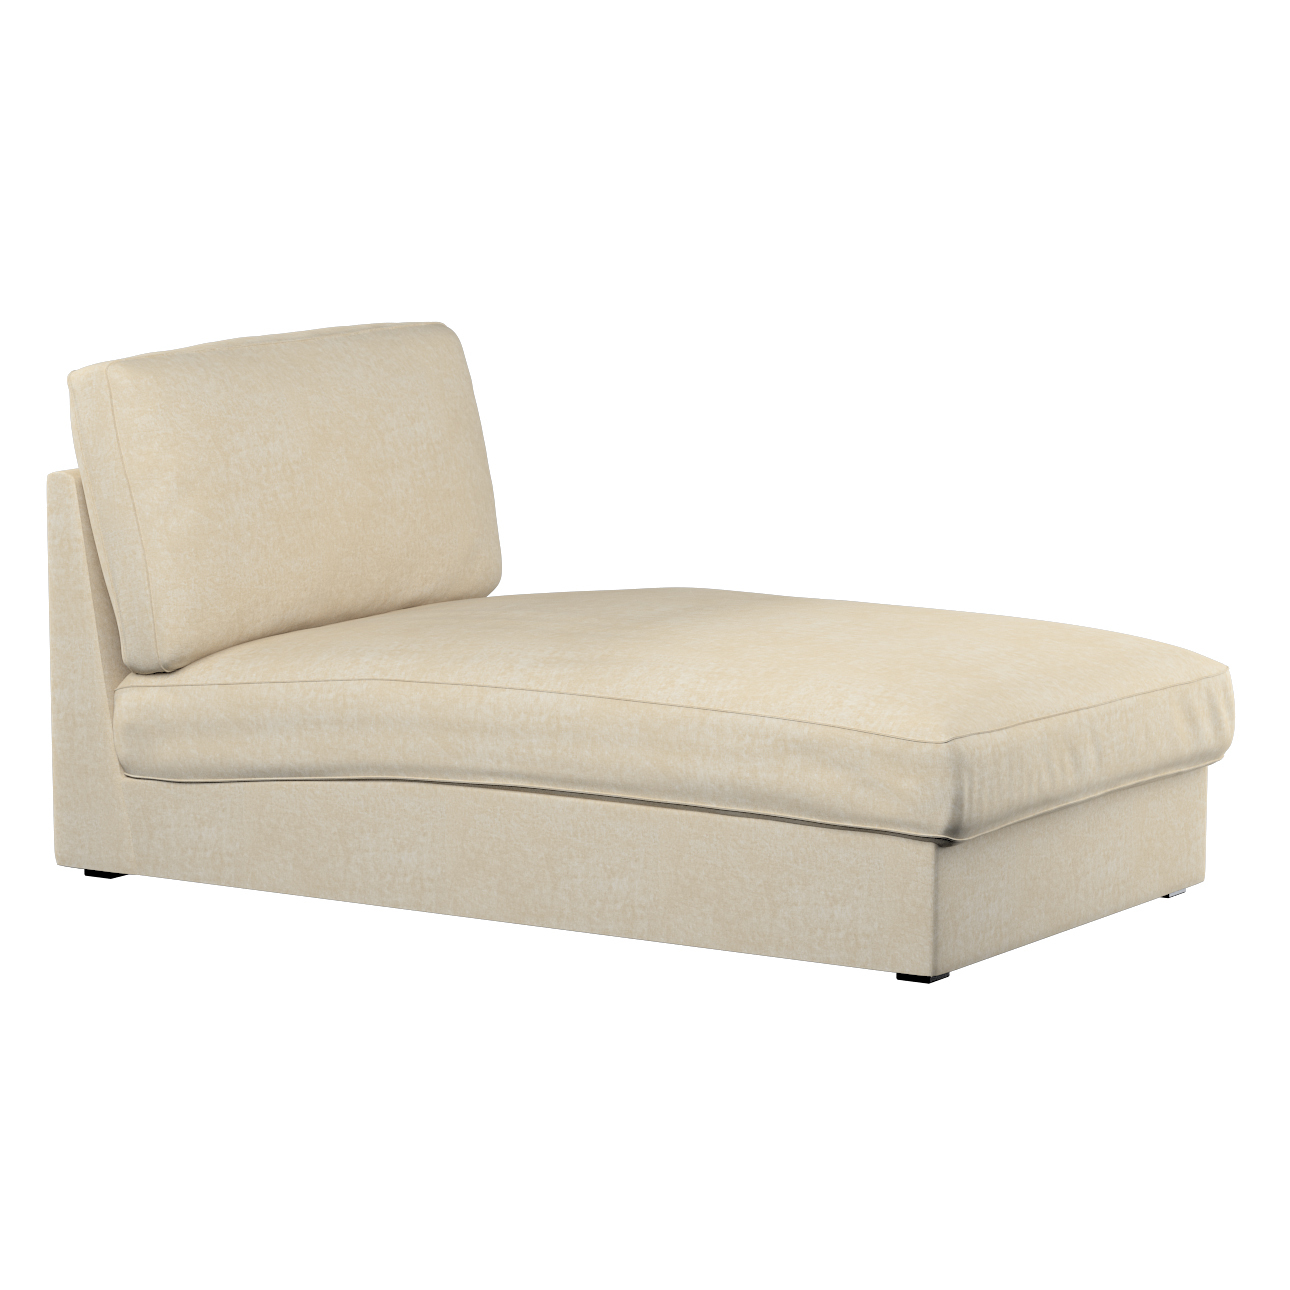 Bezug für Kivik Recamiere Sofa, grau-beige, Bezug für Kivik Recamiere, Chen günstig online kaufen